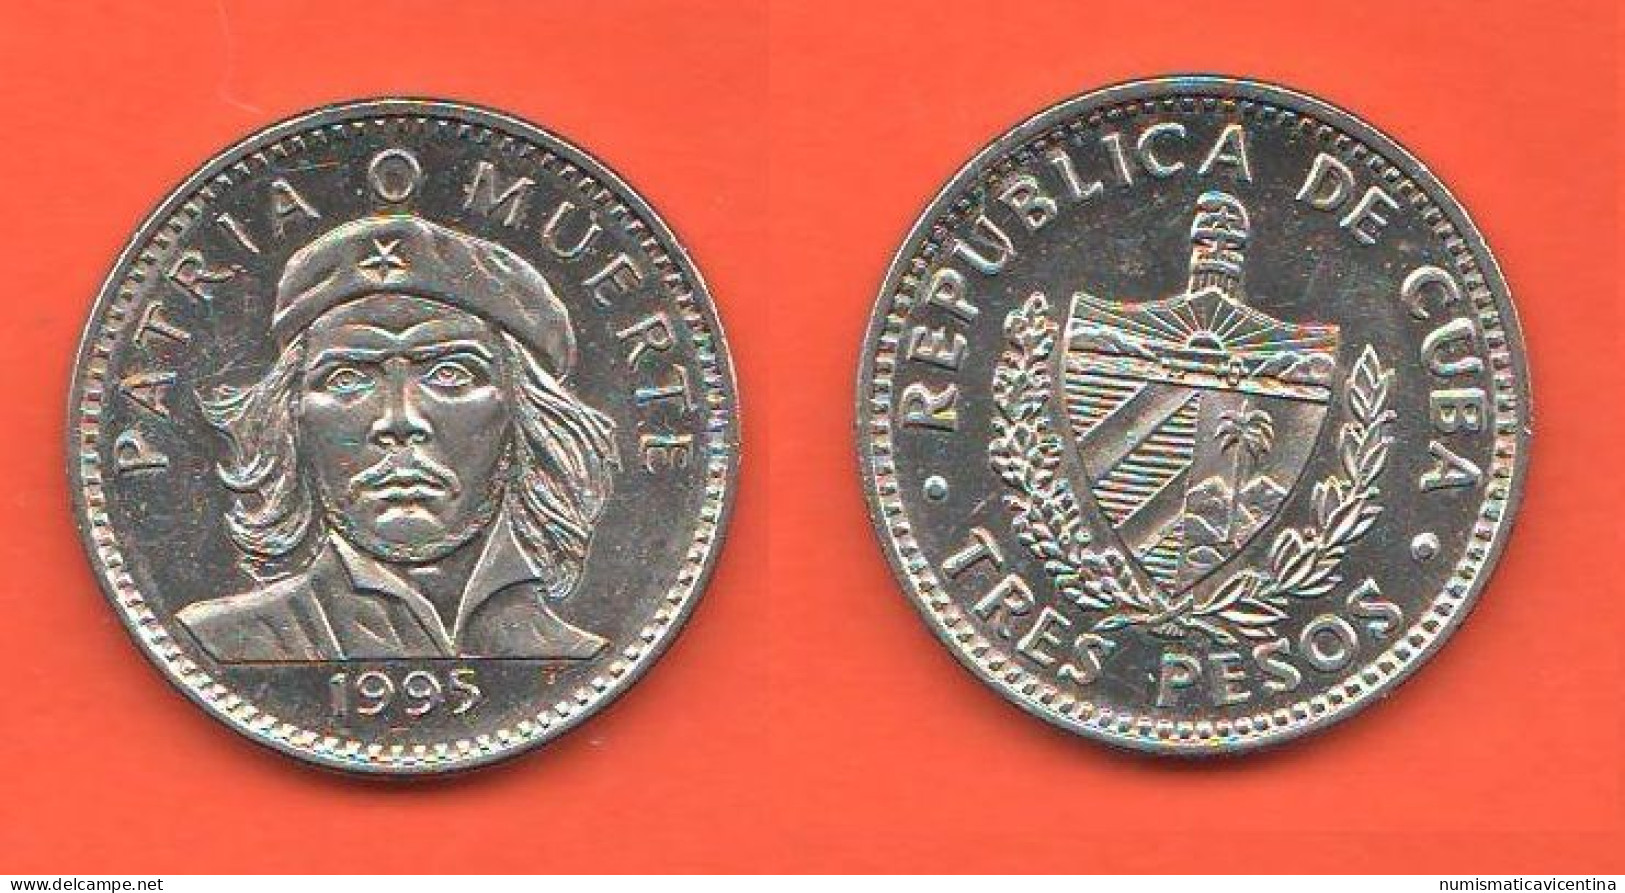 Cuba 3 Pesos 1995 Che Guevara Nickel Coin Motto Patria O Muerte - Kuba